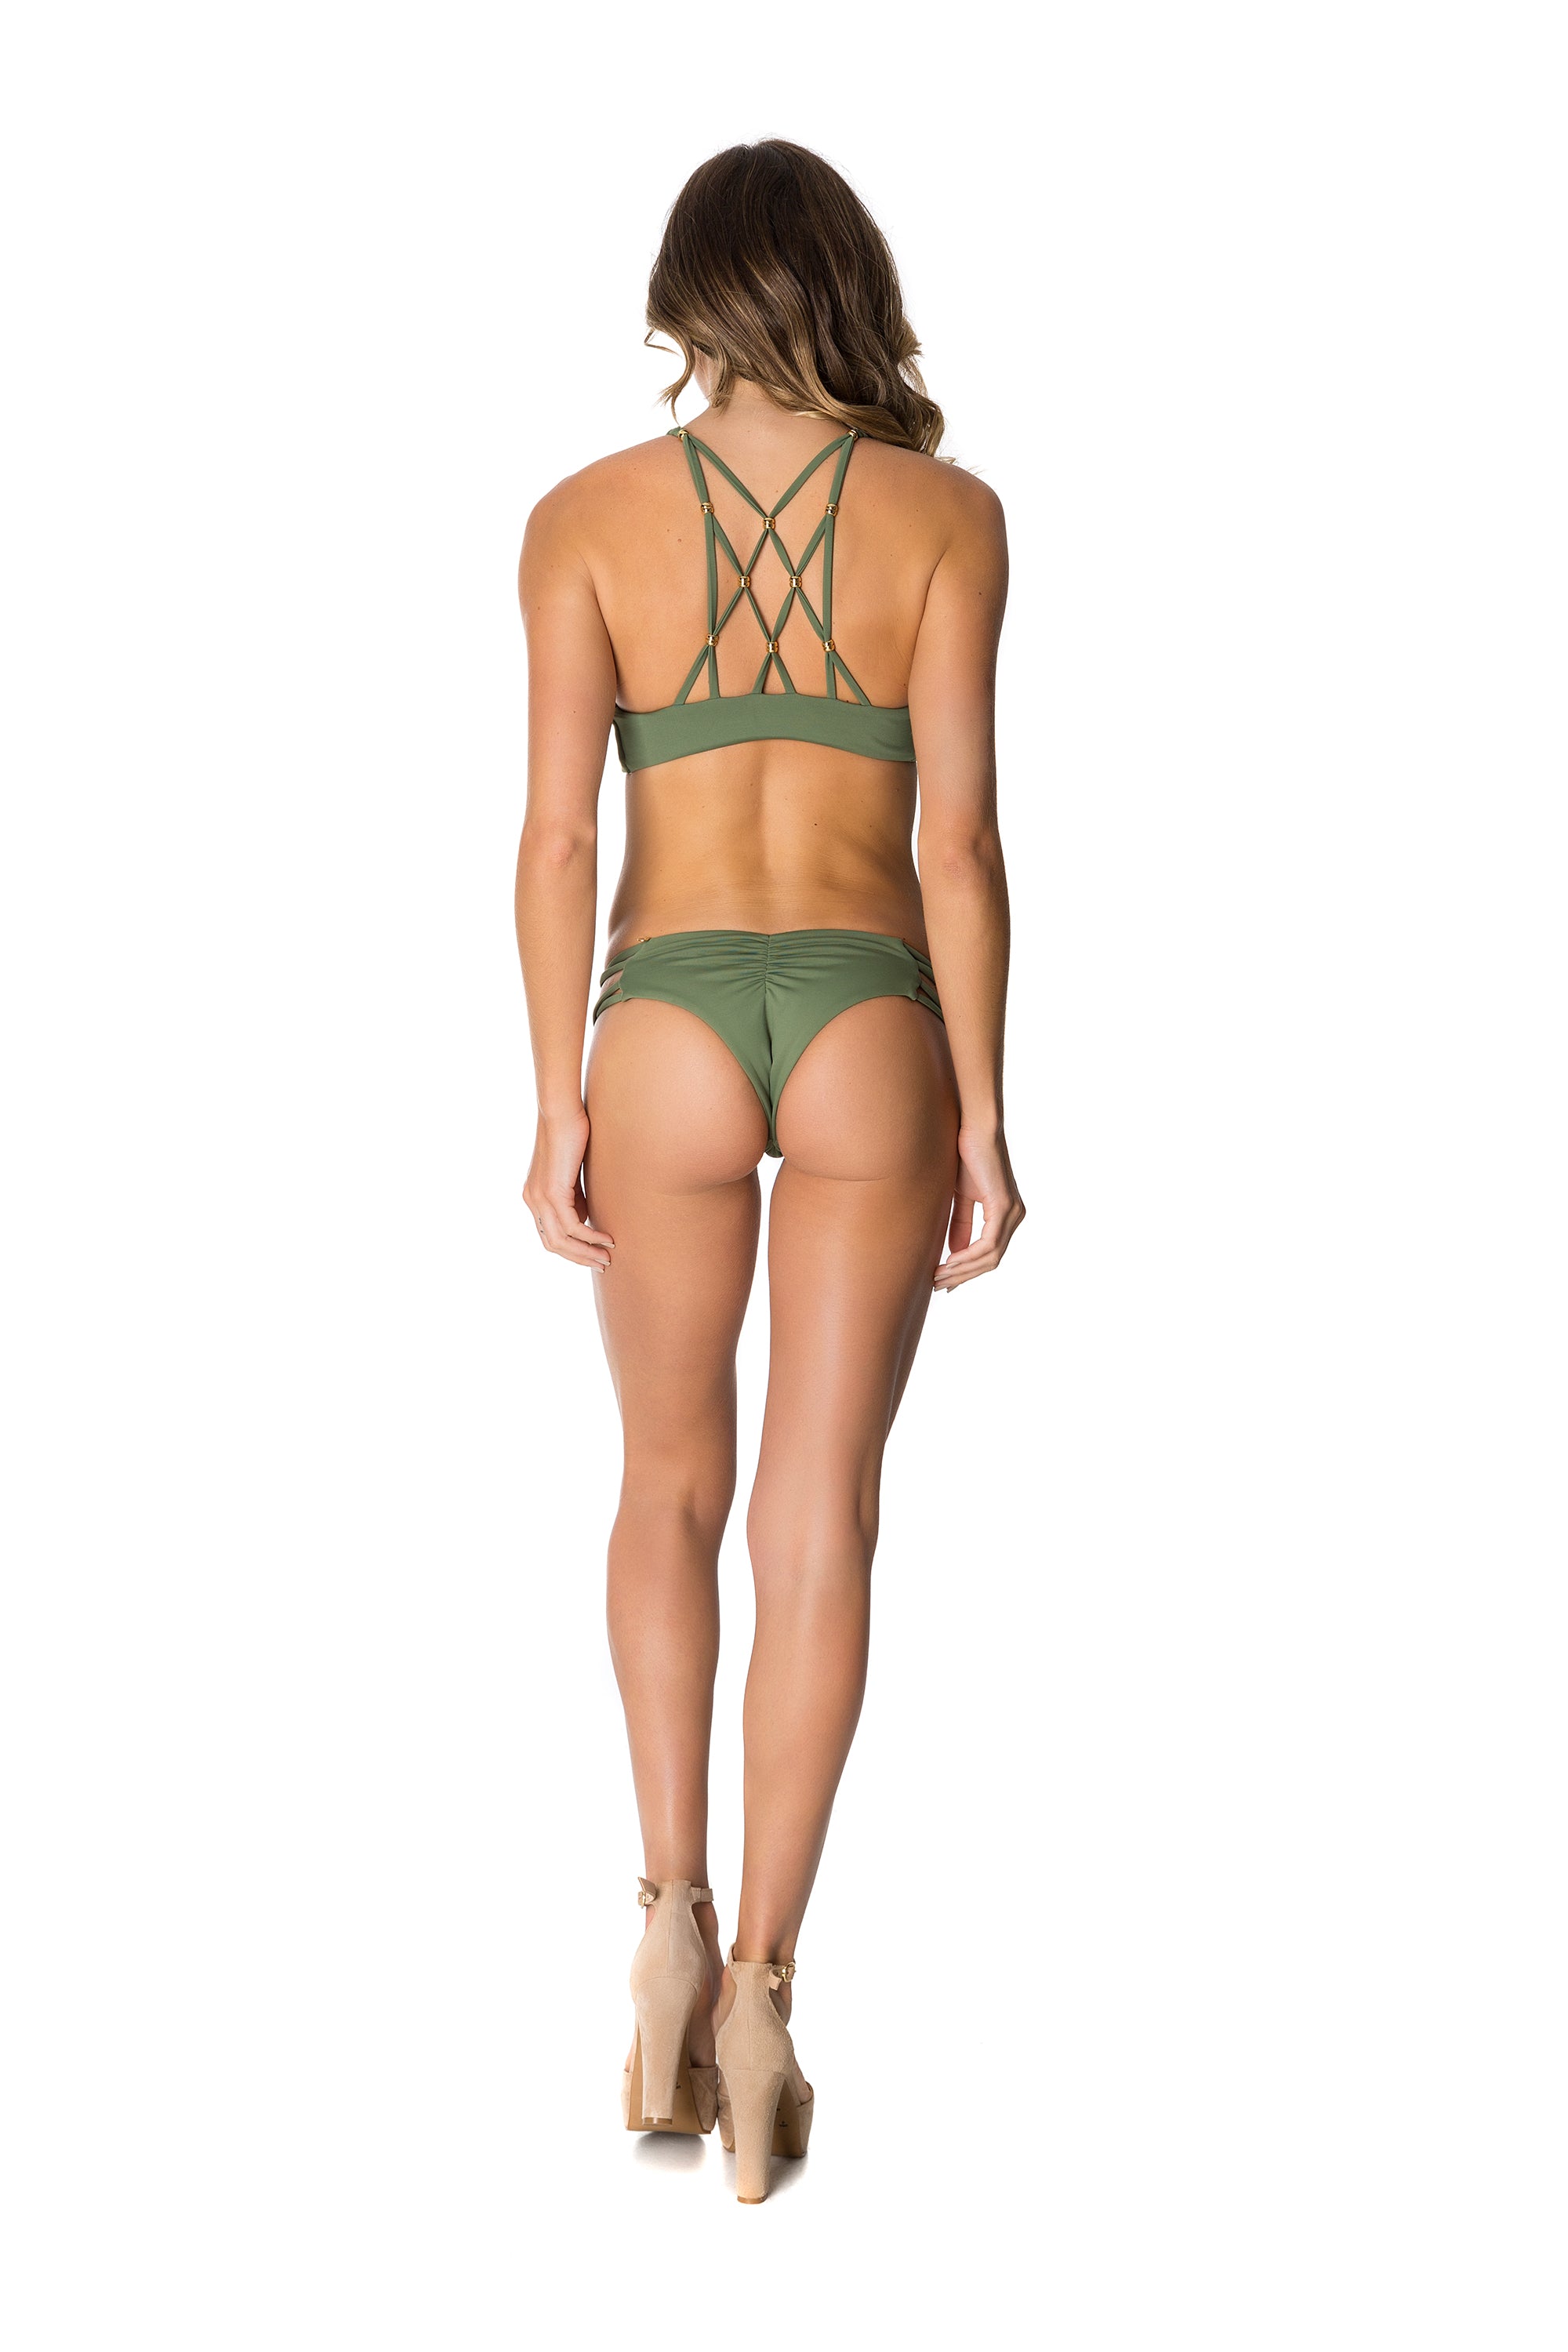 Mairin Bottom in Olive Green - Lybethras Swimwear